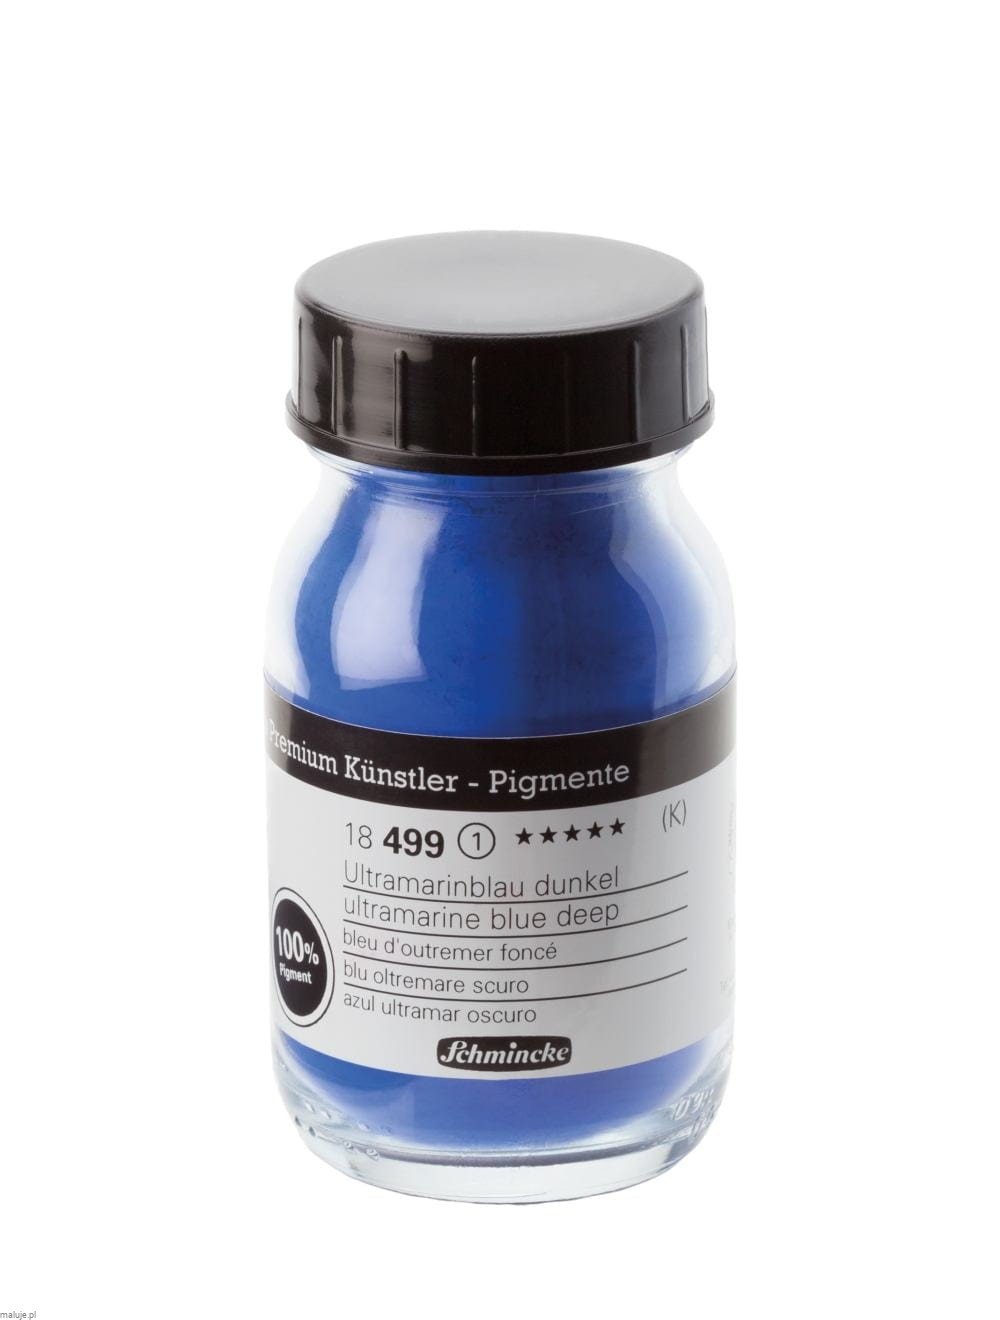 Schmincke Pure Artists' Pigments 499 Ultramarine Blue Deep 100ml - pigment artystyczny sypki